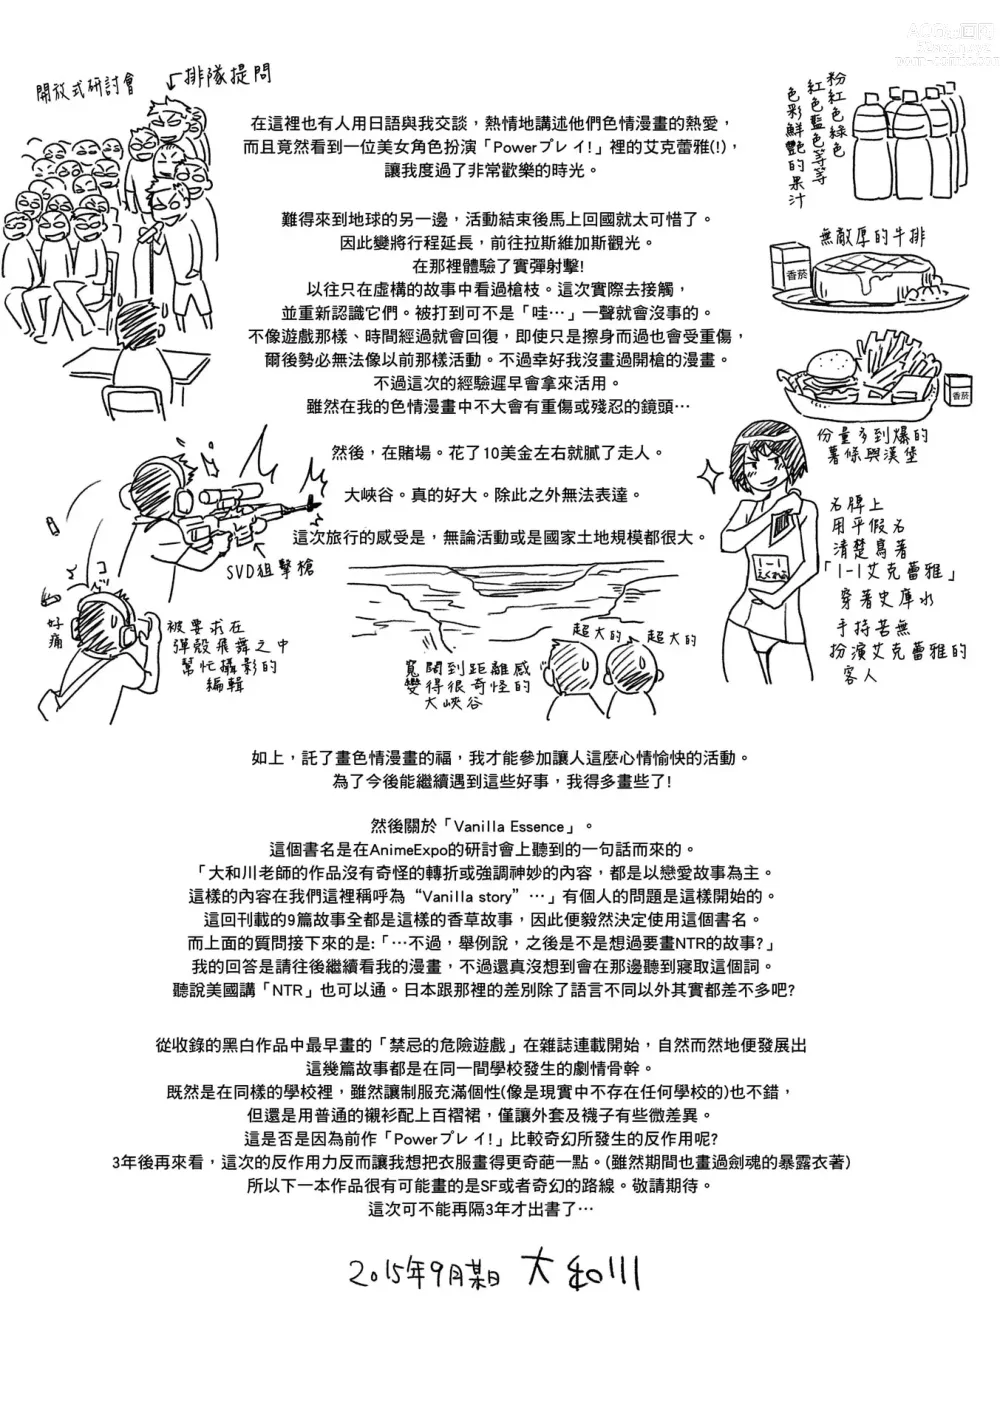 Page 215 of manga 甜美香濃的香草精華 (uncensored)